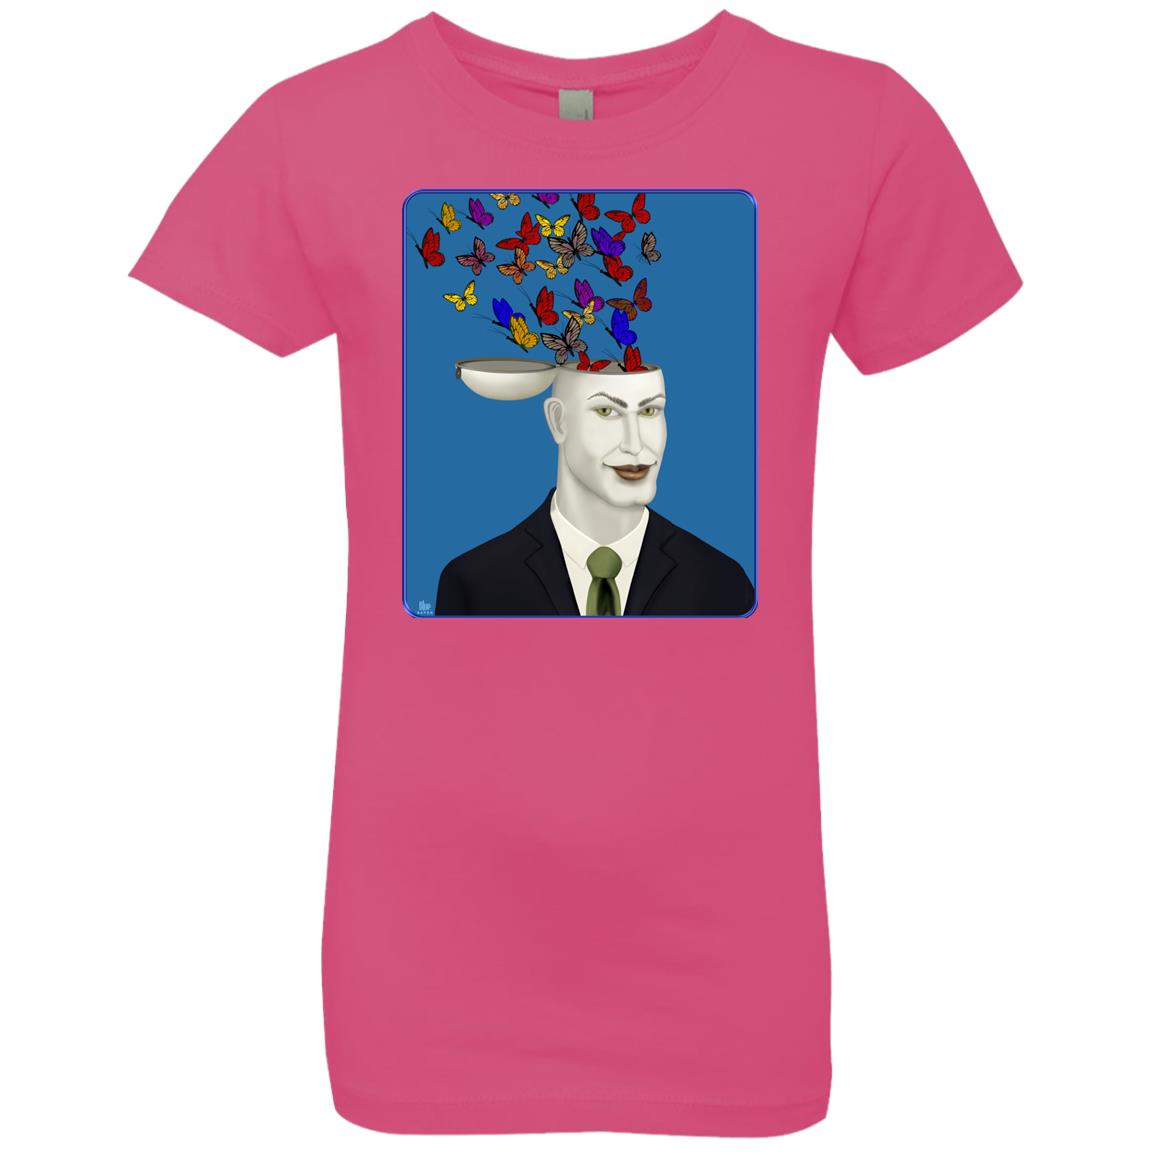 Let Creativity Fly - Girl's Premium Cotton T-Shirt